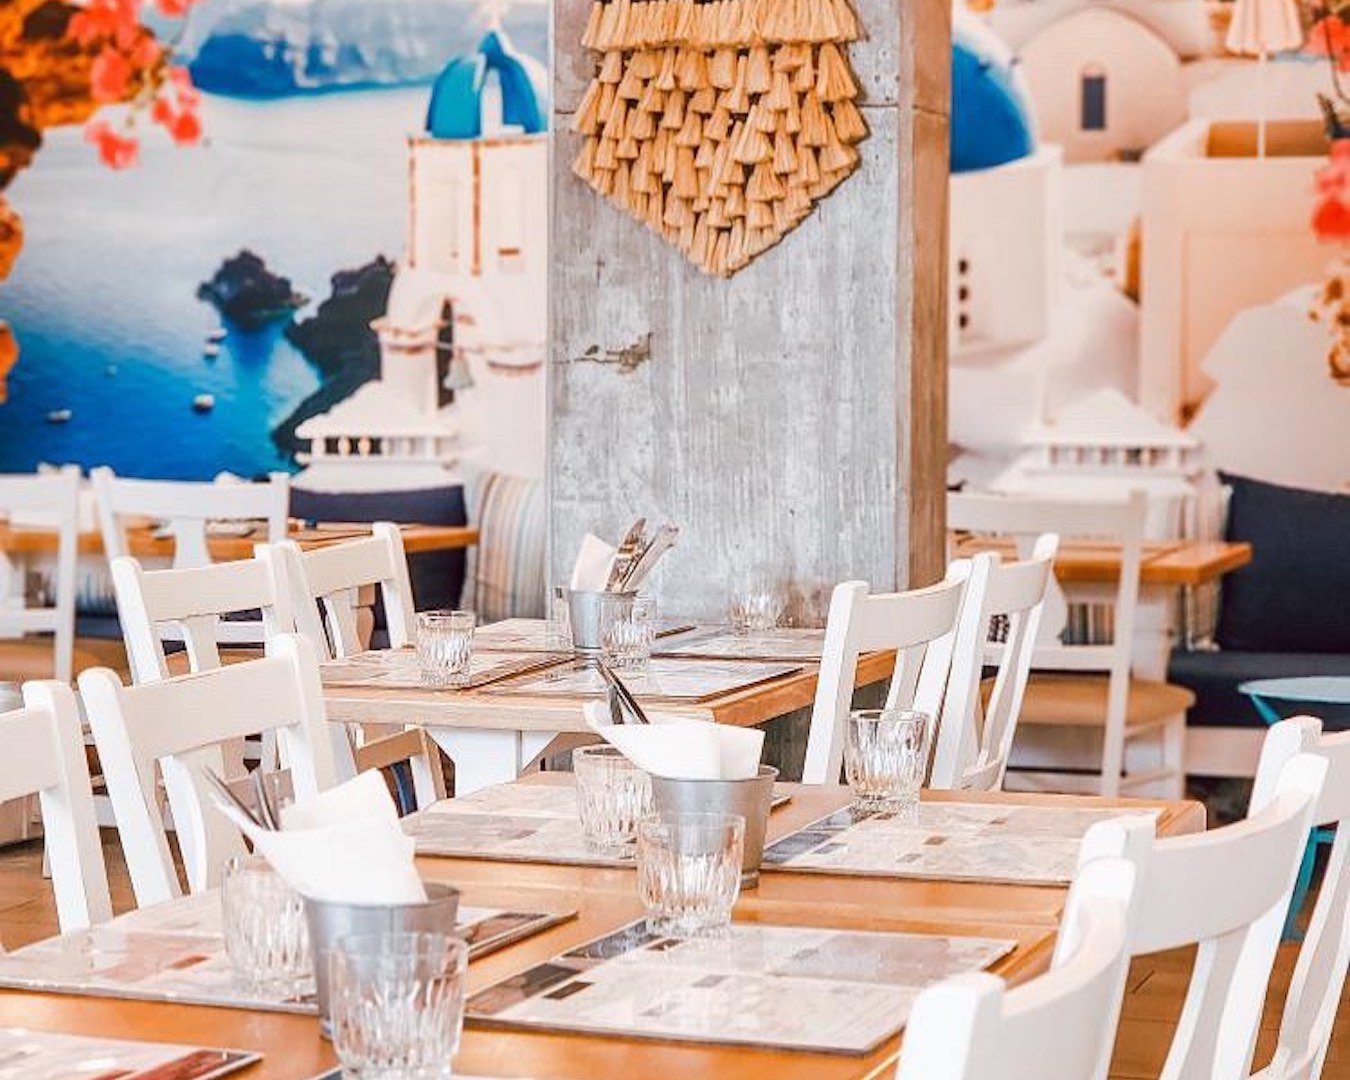 Inside Yesfi At Attika, greek restaurant and cafe in Perth